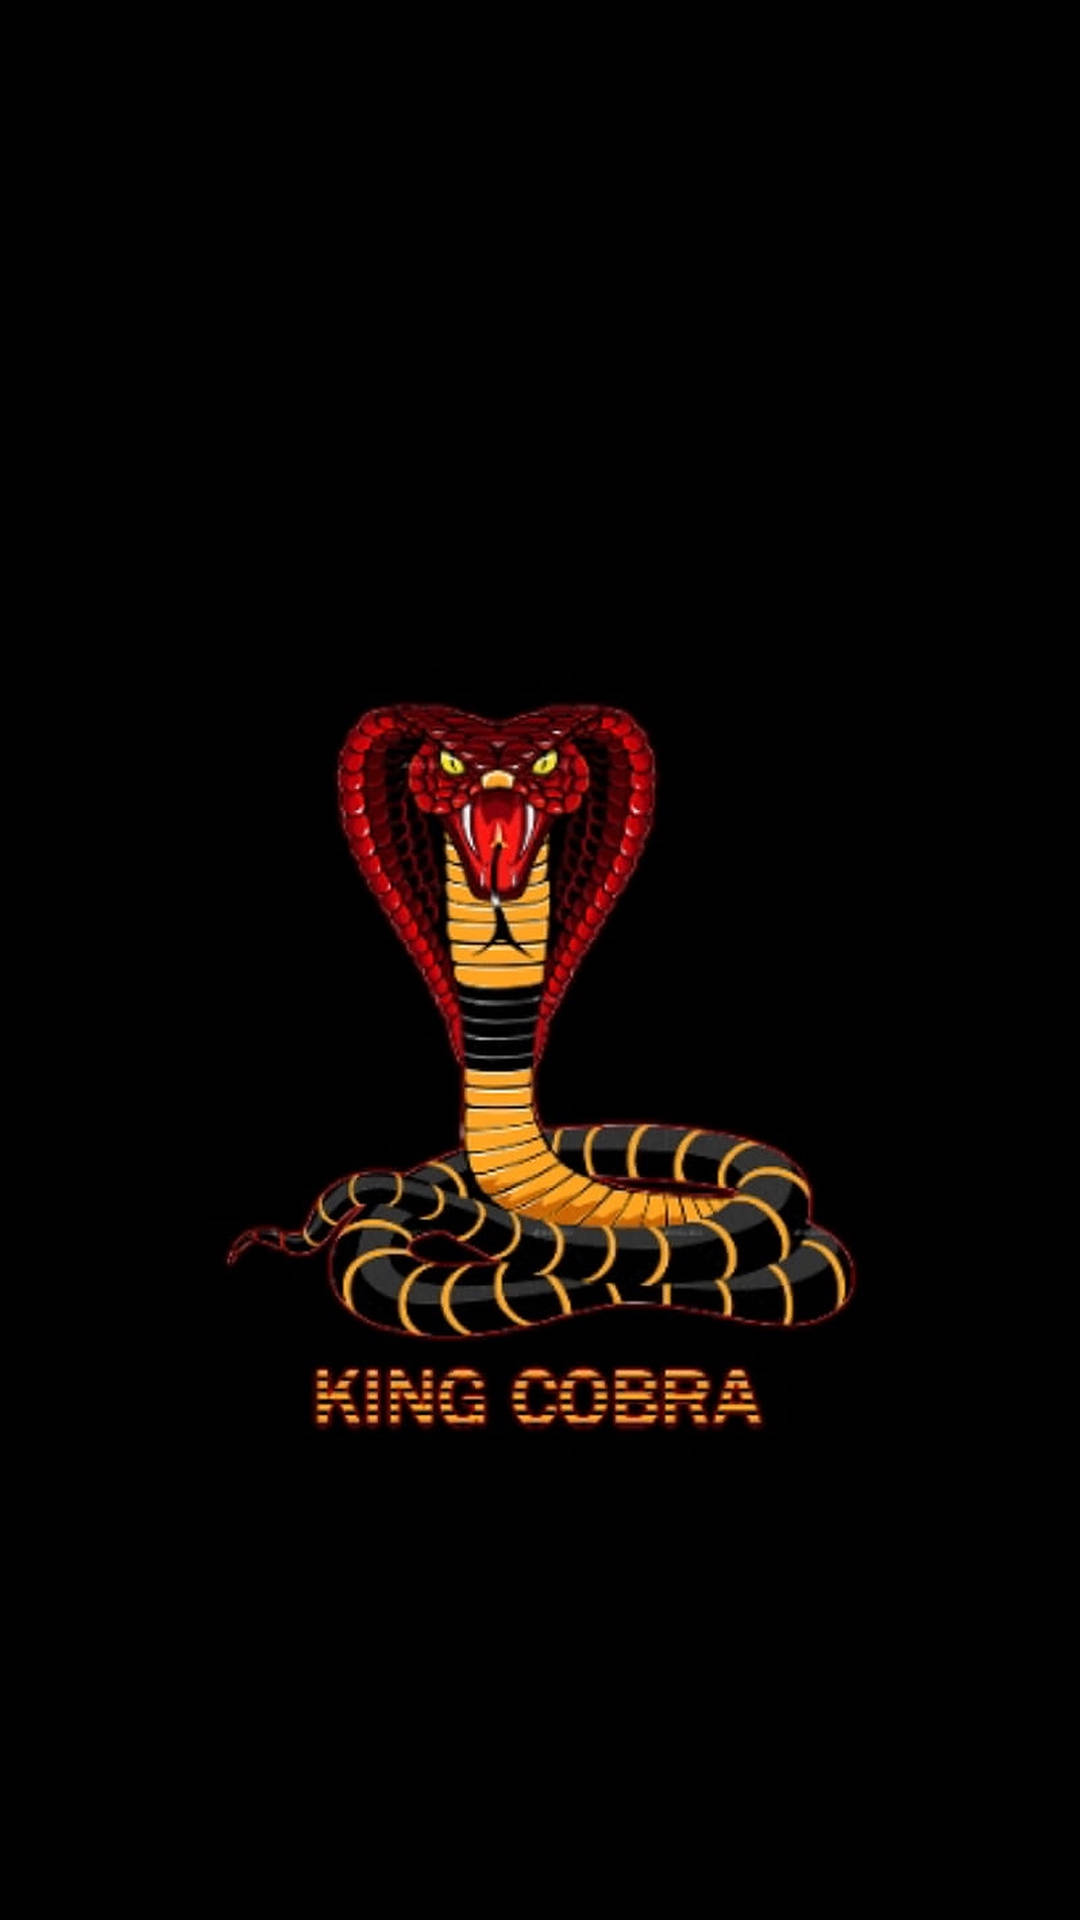 Free King Cobra Wallpaper Downloads 100 King Cobra Wallpapers for FREE   Wallpaperscom